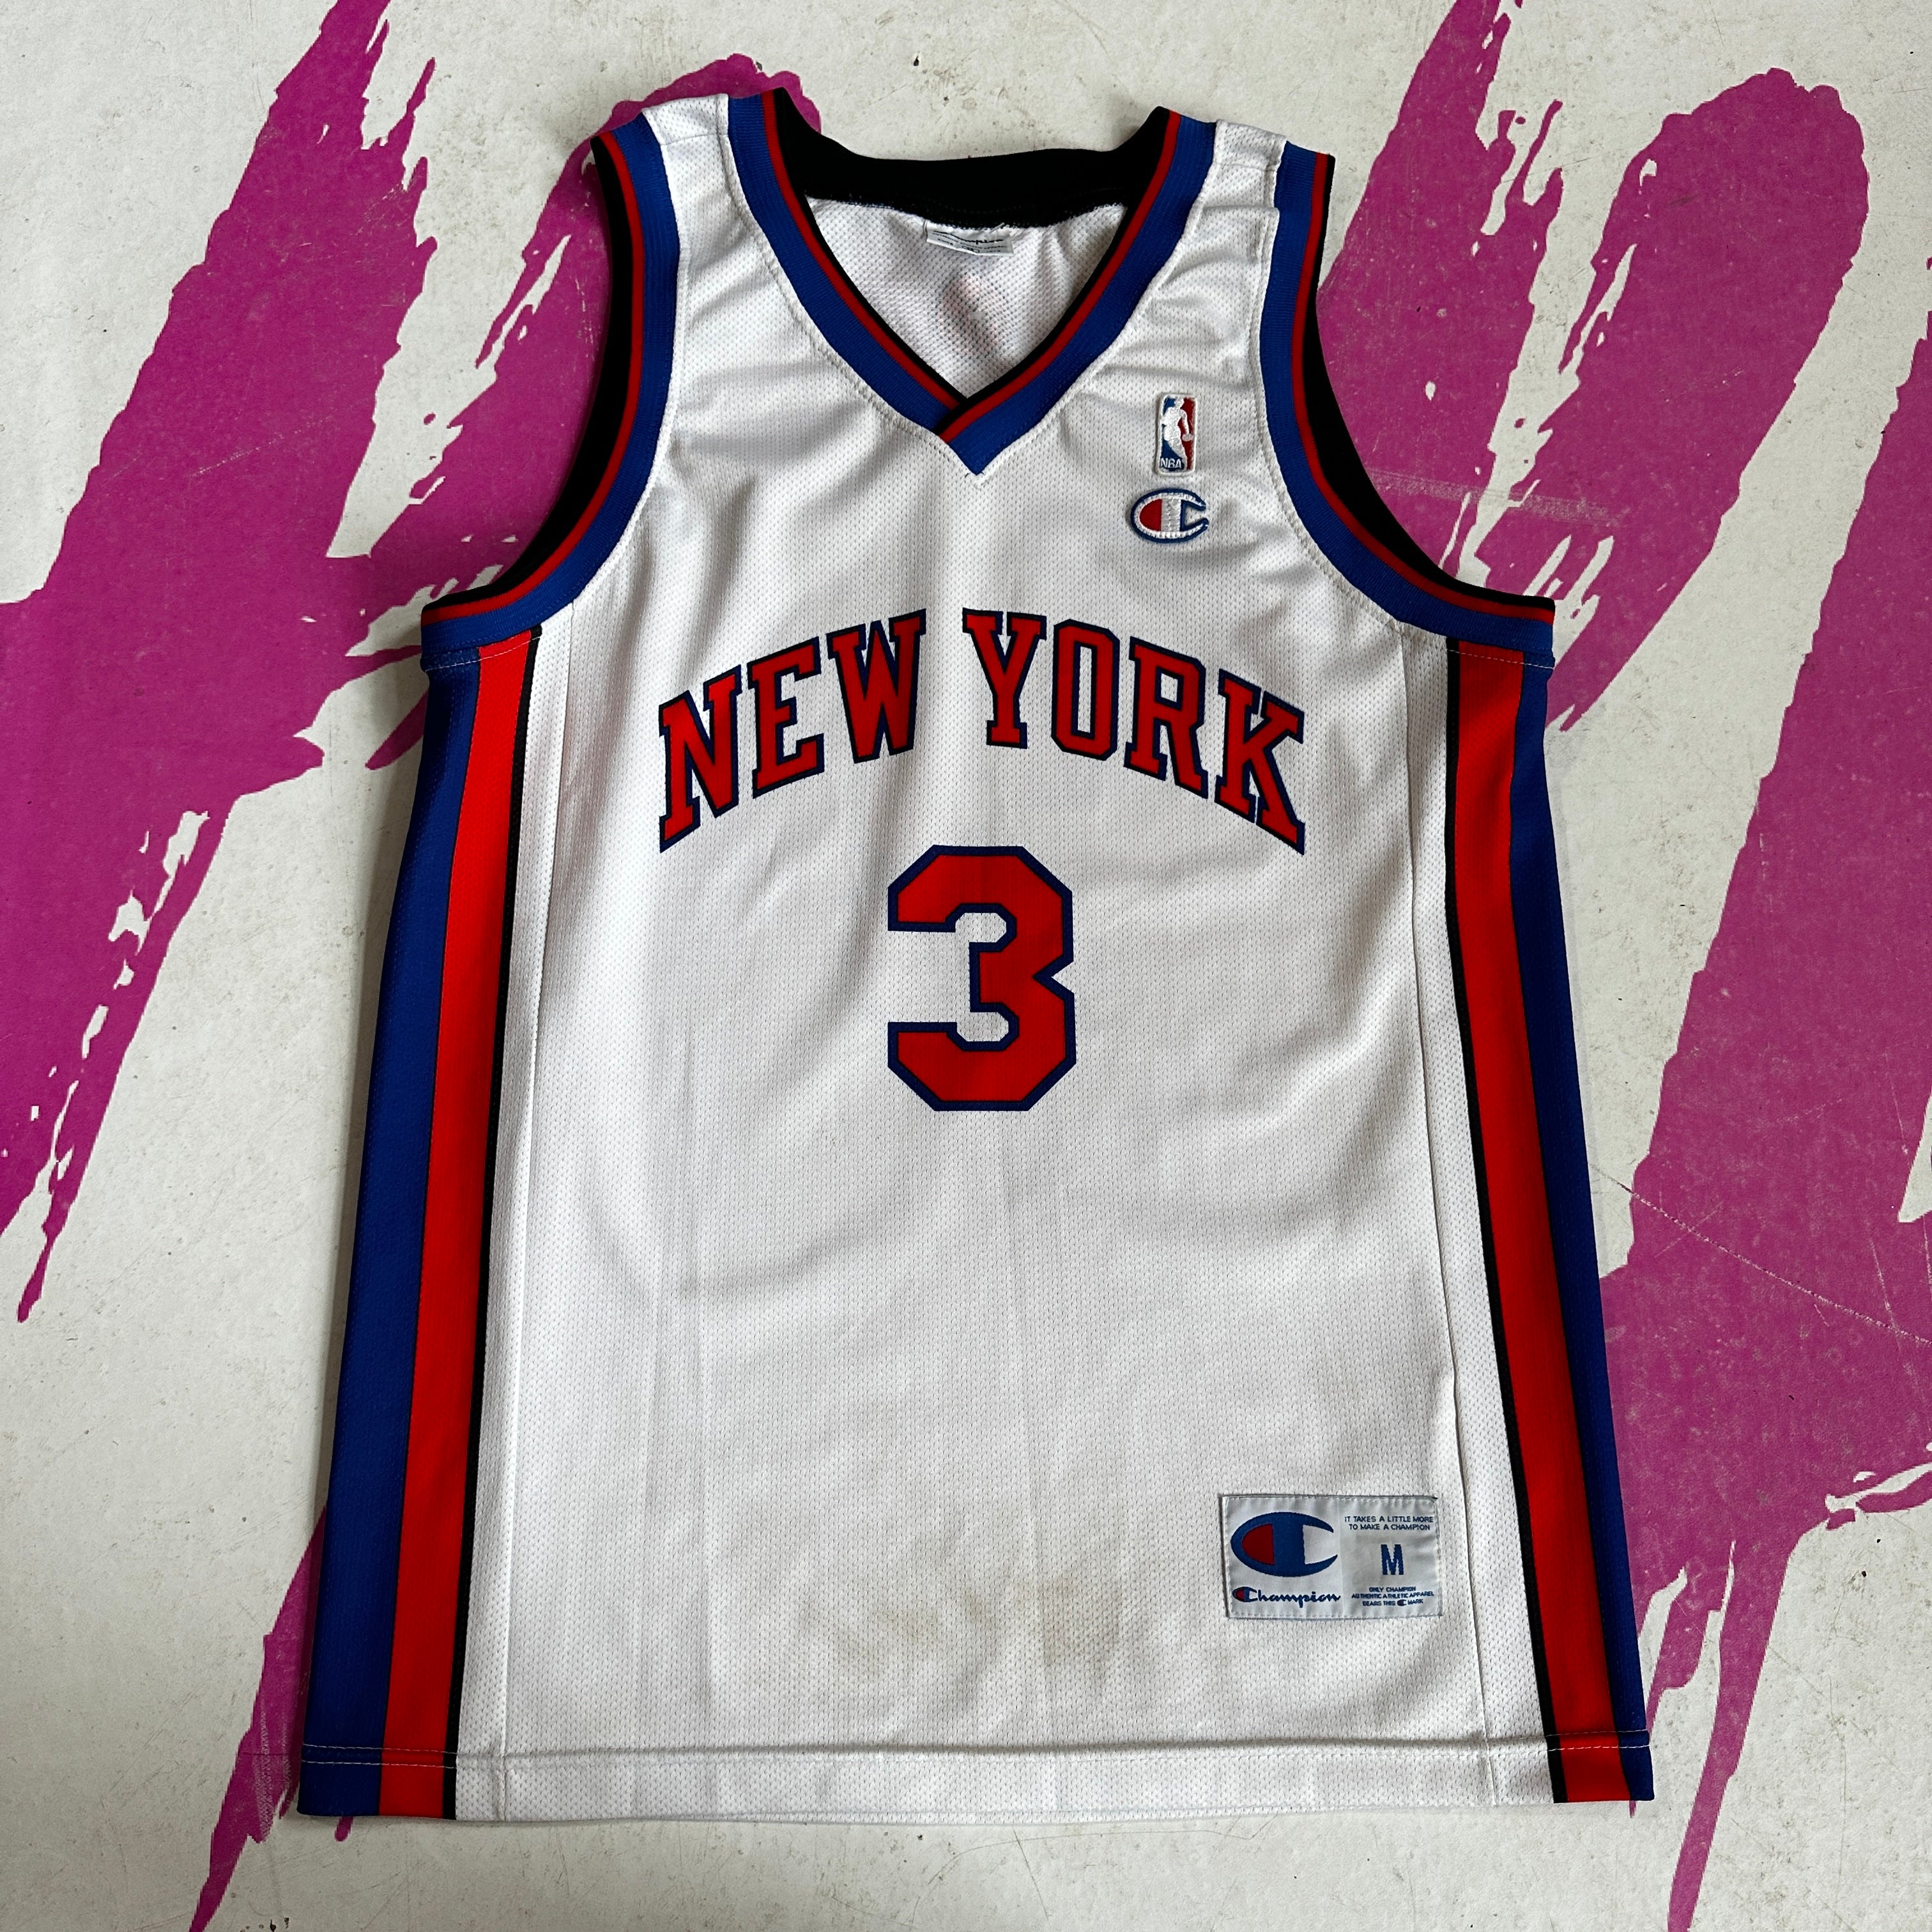 NBA Basketball Champions 2023 New York Knicks shirt - Limotees